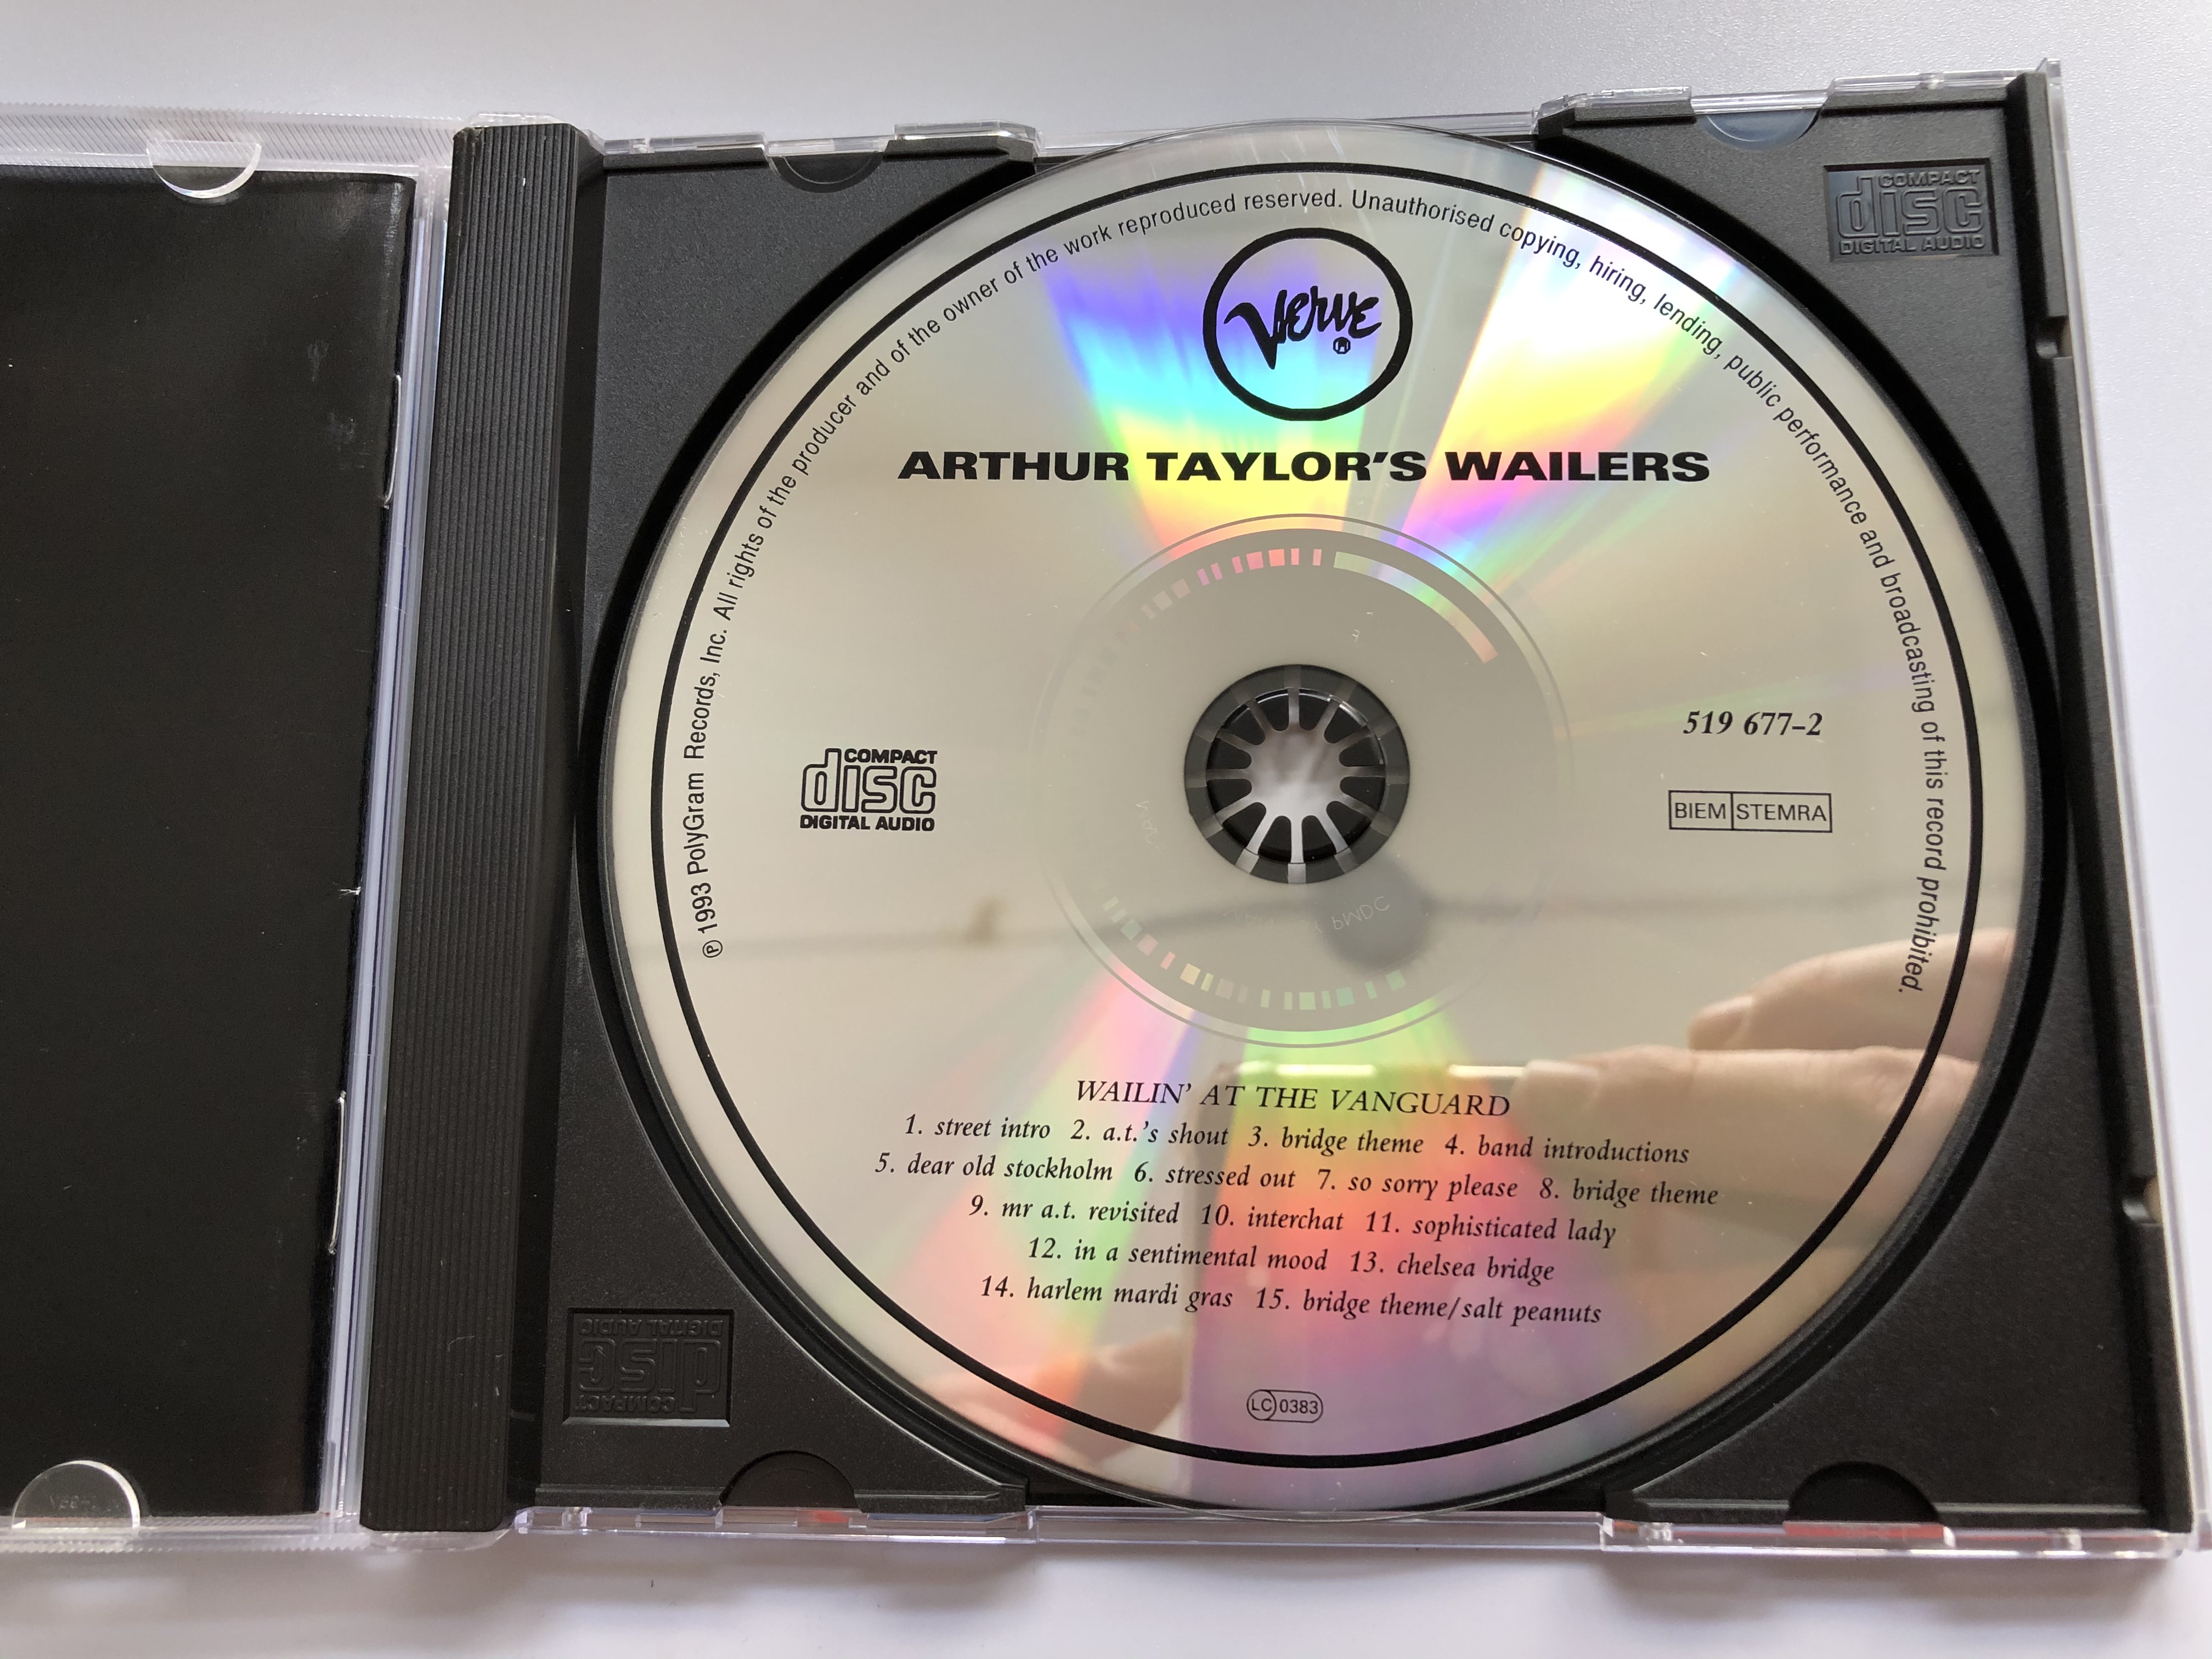 arthur-taylor-s-wailers-wailin-at-the-vanguard-verve-records-audio-cd-1993-519-677-2-6-.jpg